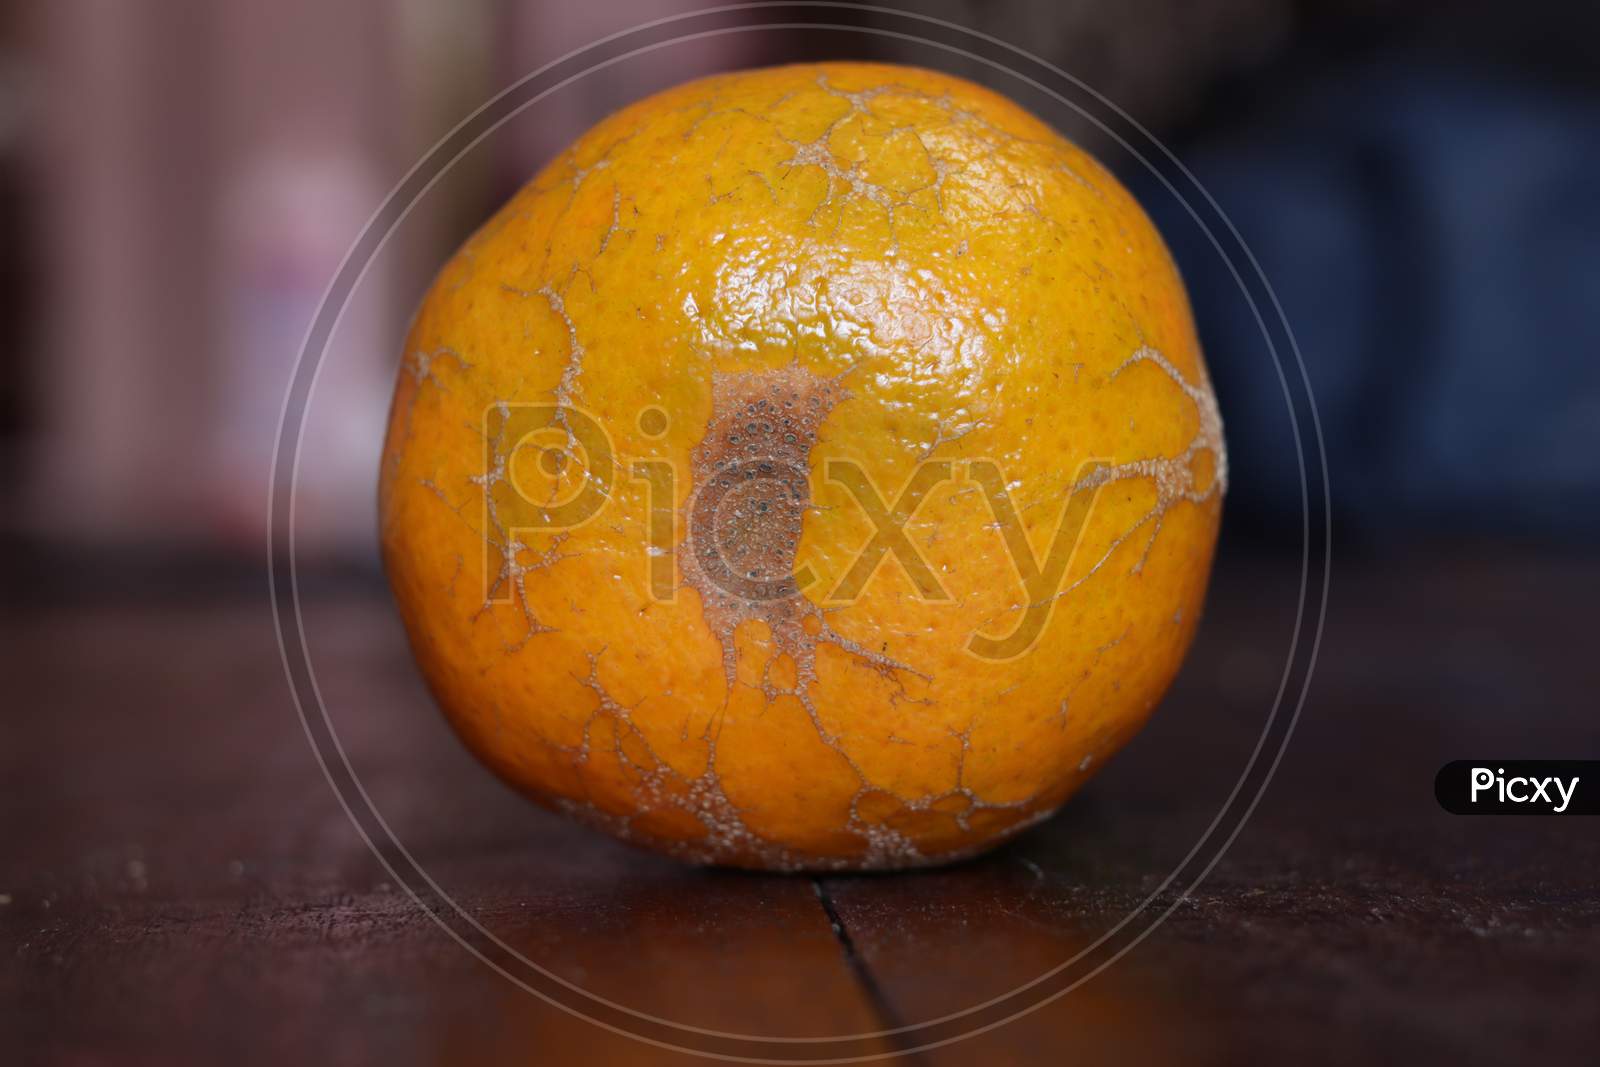 Orange Fruit, Healthy Fruit On Wooden Table Background